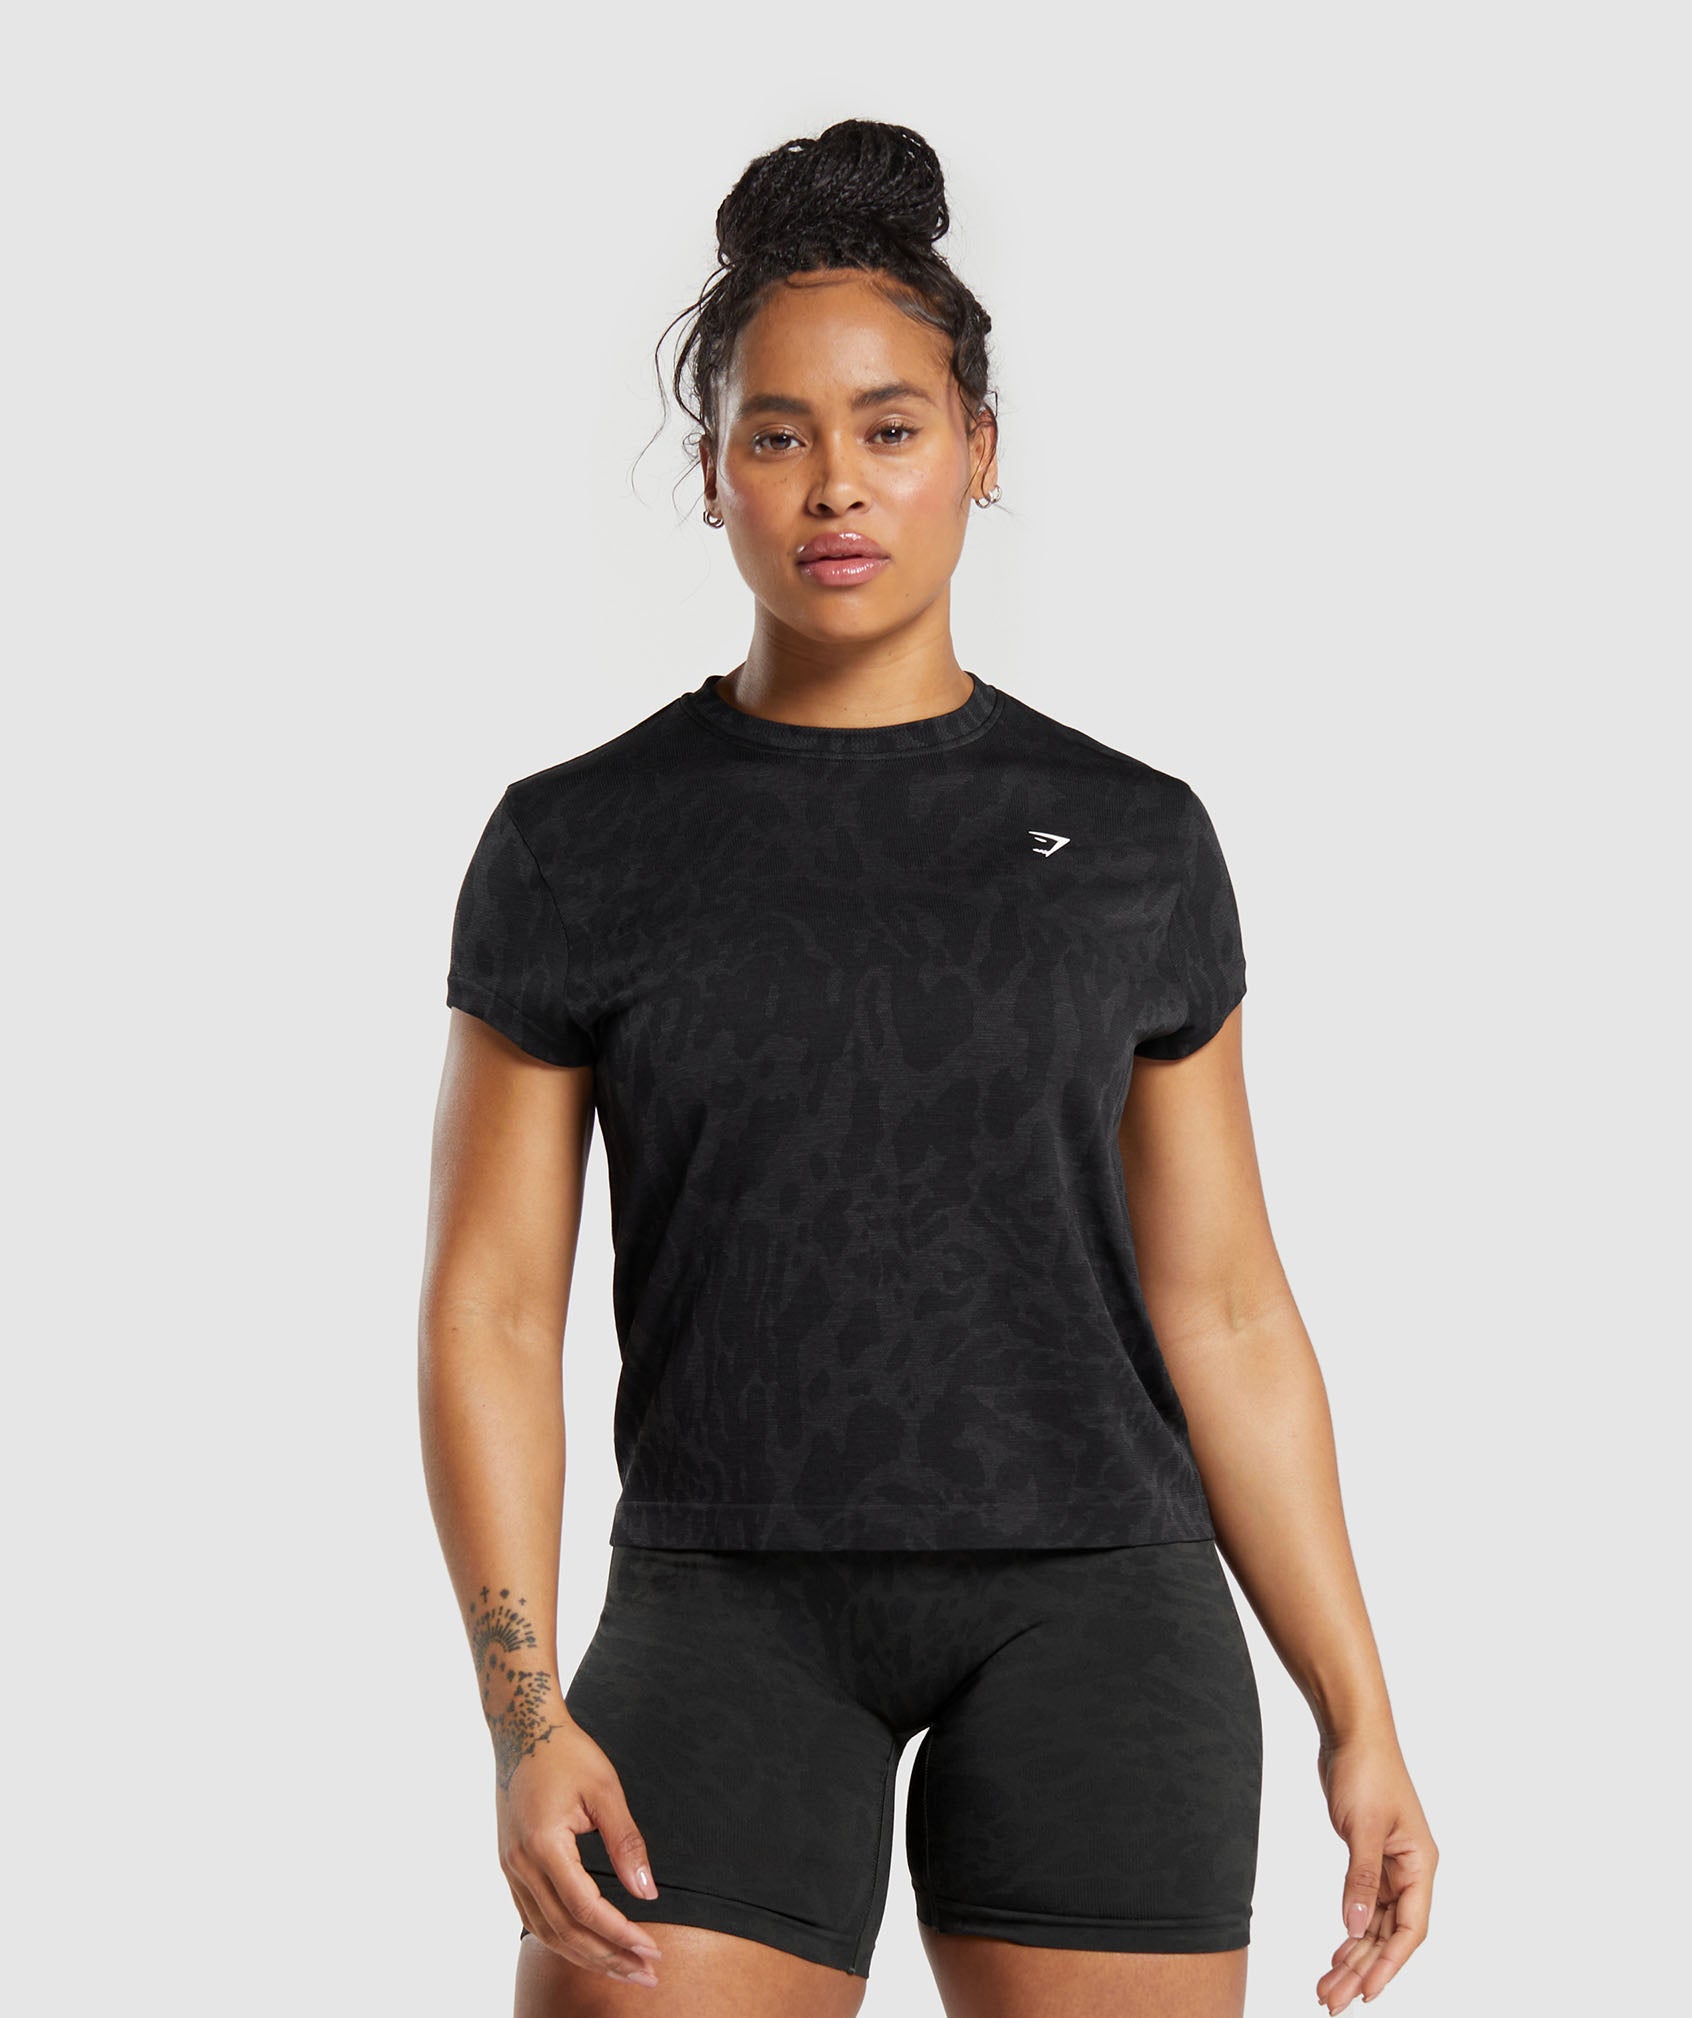 Adapt Safari Seamless T-Shirt dans Black/Asphalt Grey